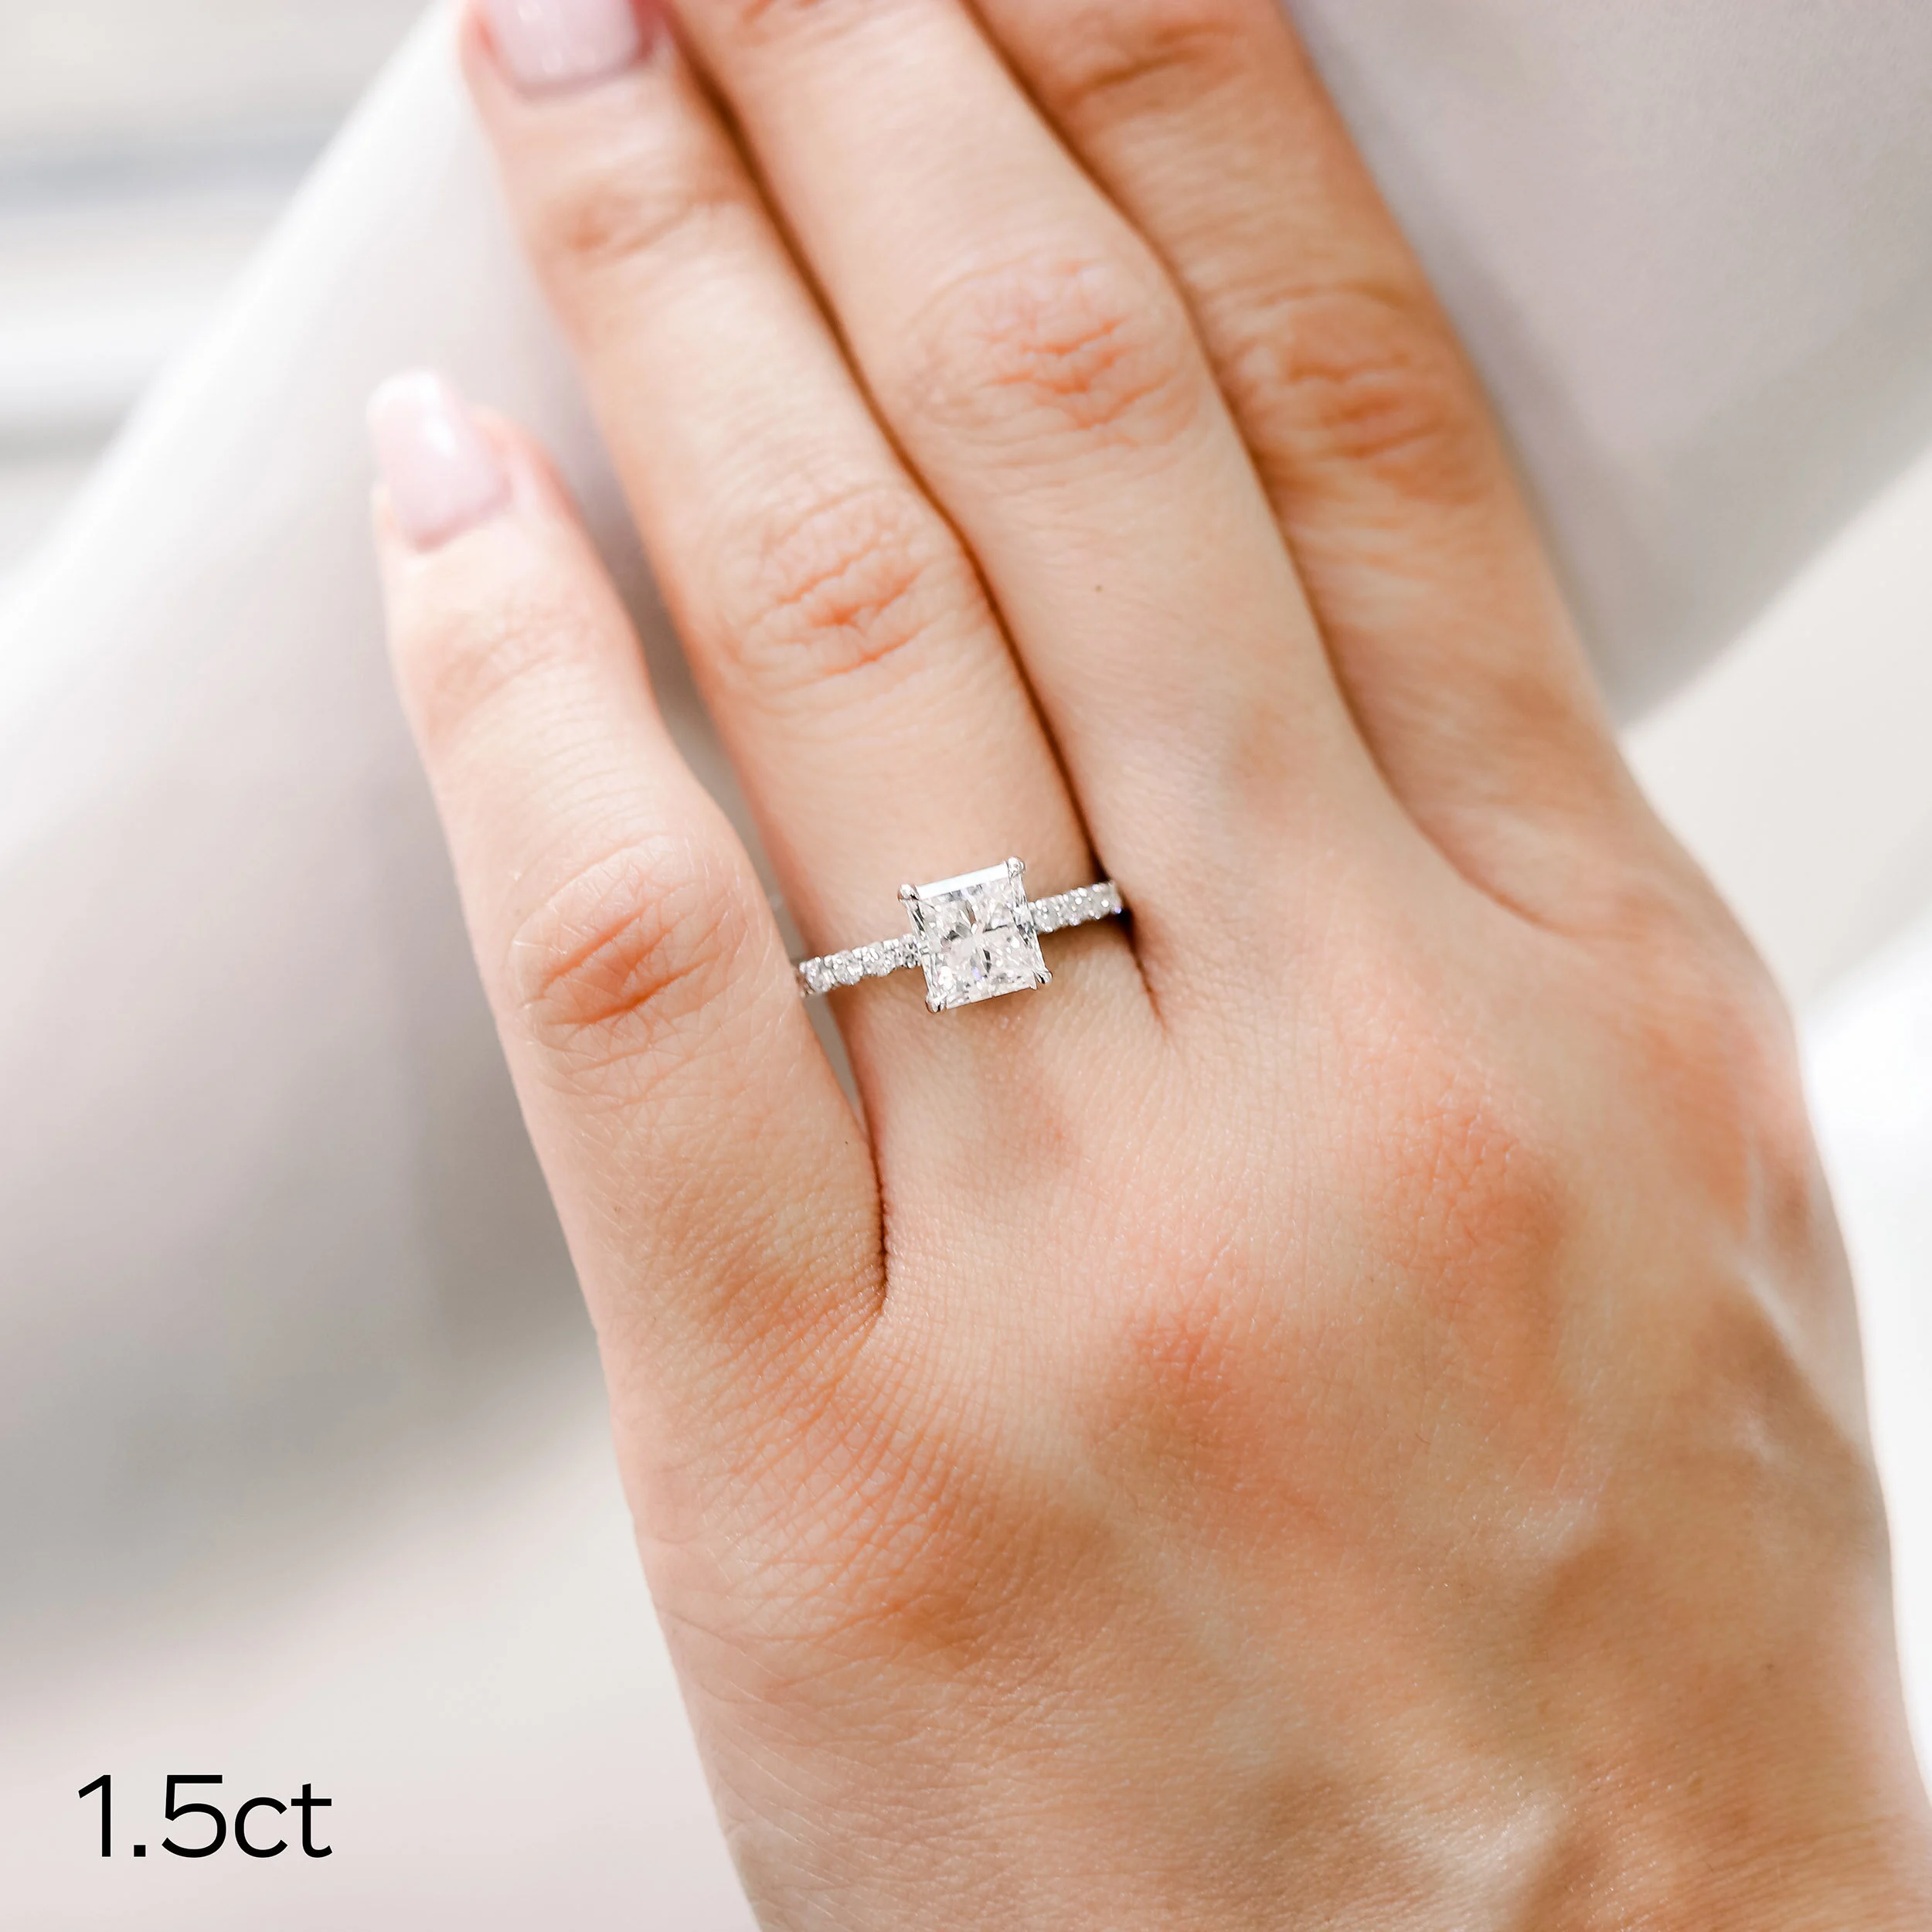 Platinum 1.5ct Princess Cut Lab Diamond Ring with Smaller Diamonds on the band Ada Diamonds Design AD-150 on Model